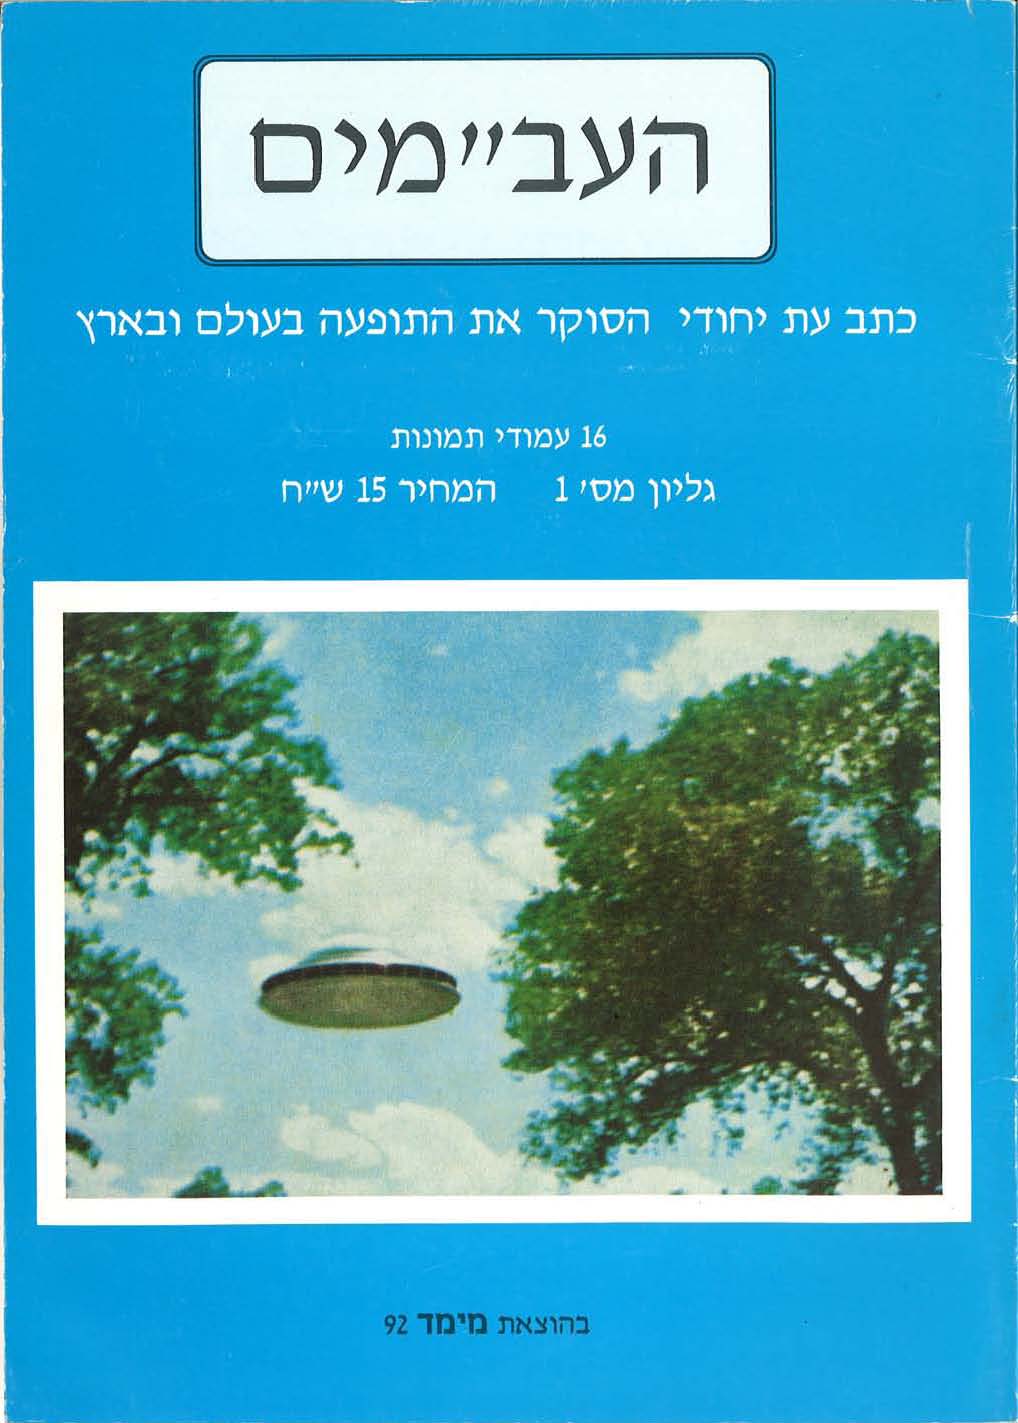 "Ha-Abameem" - "UFOs" (March 1992)